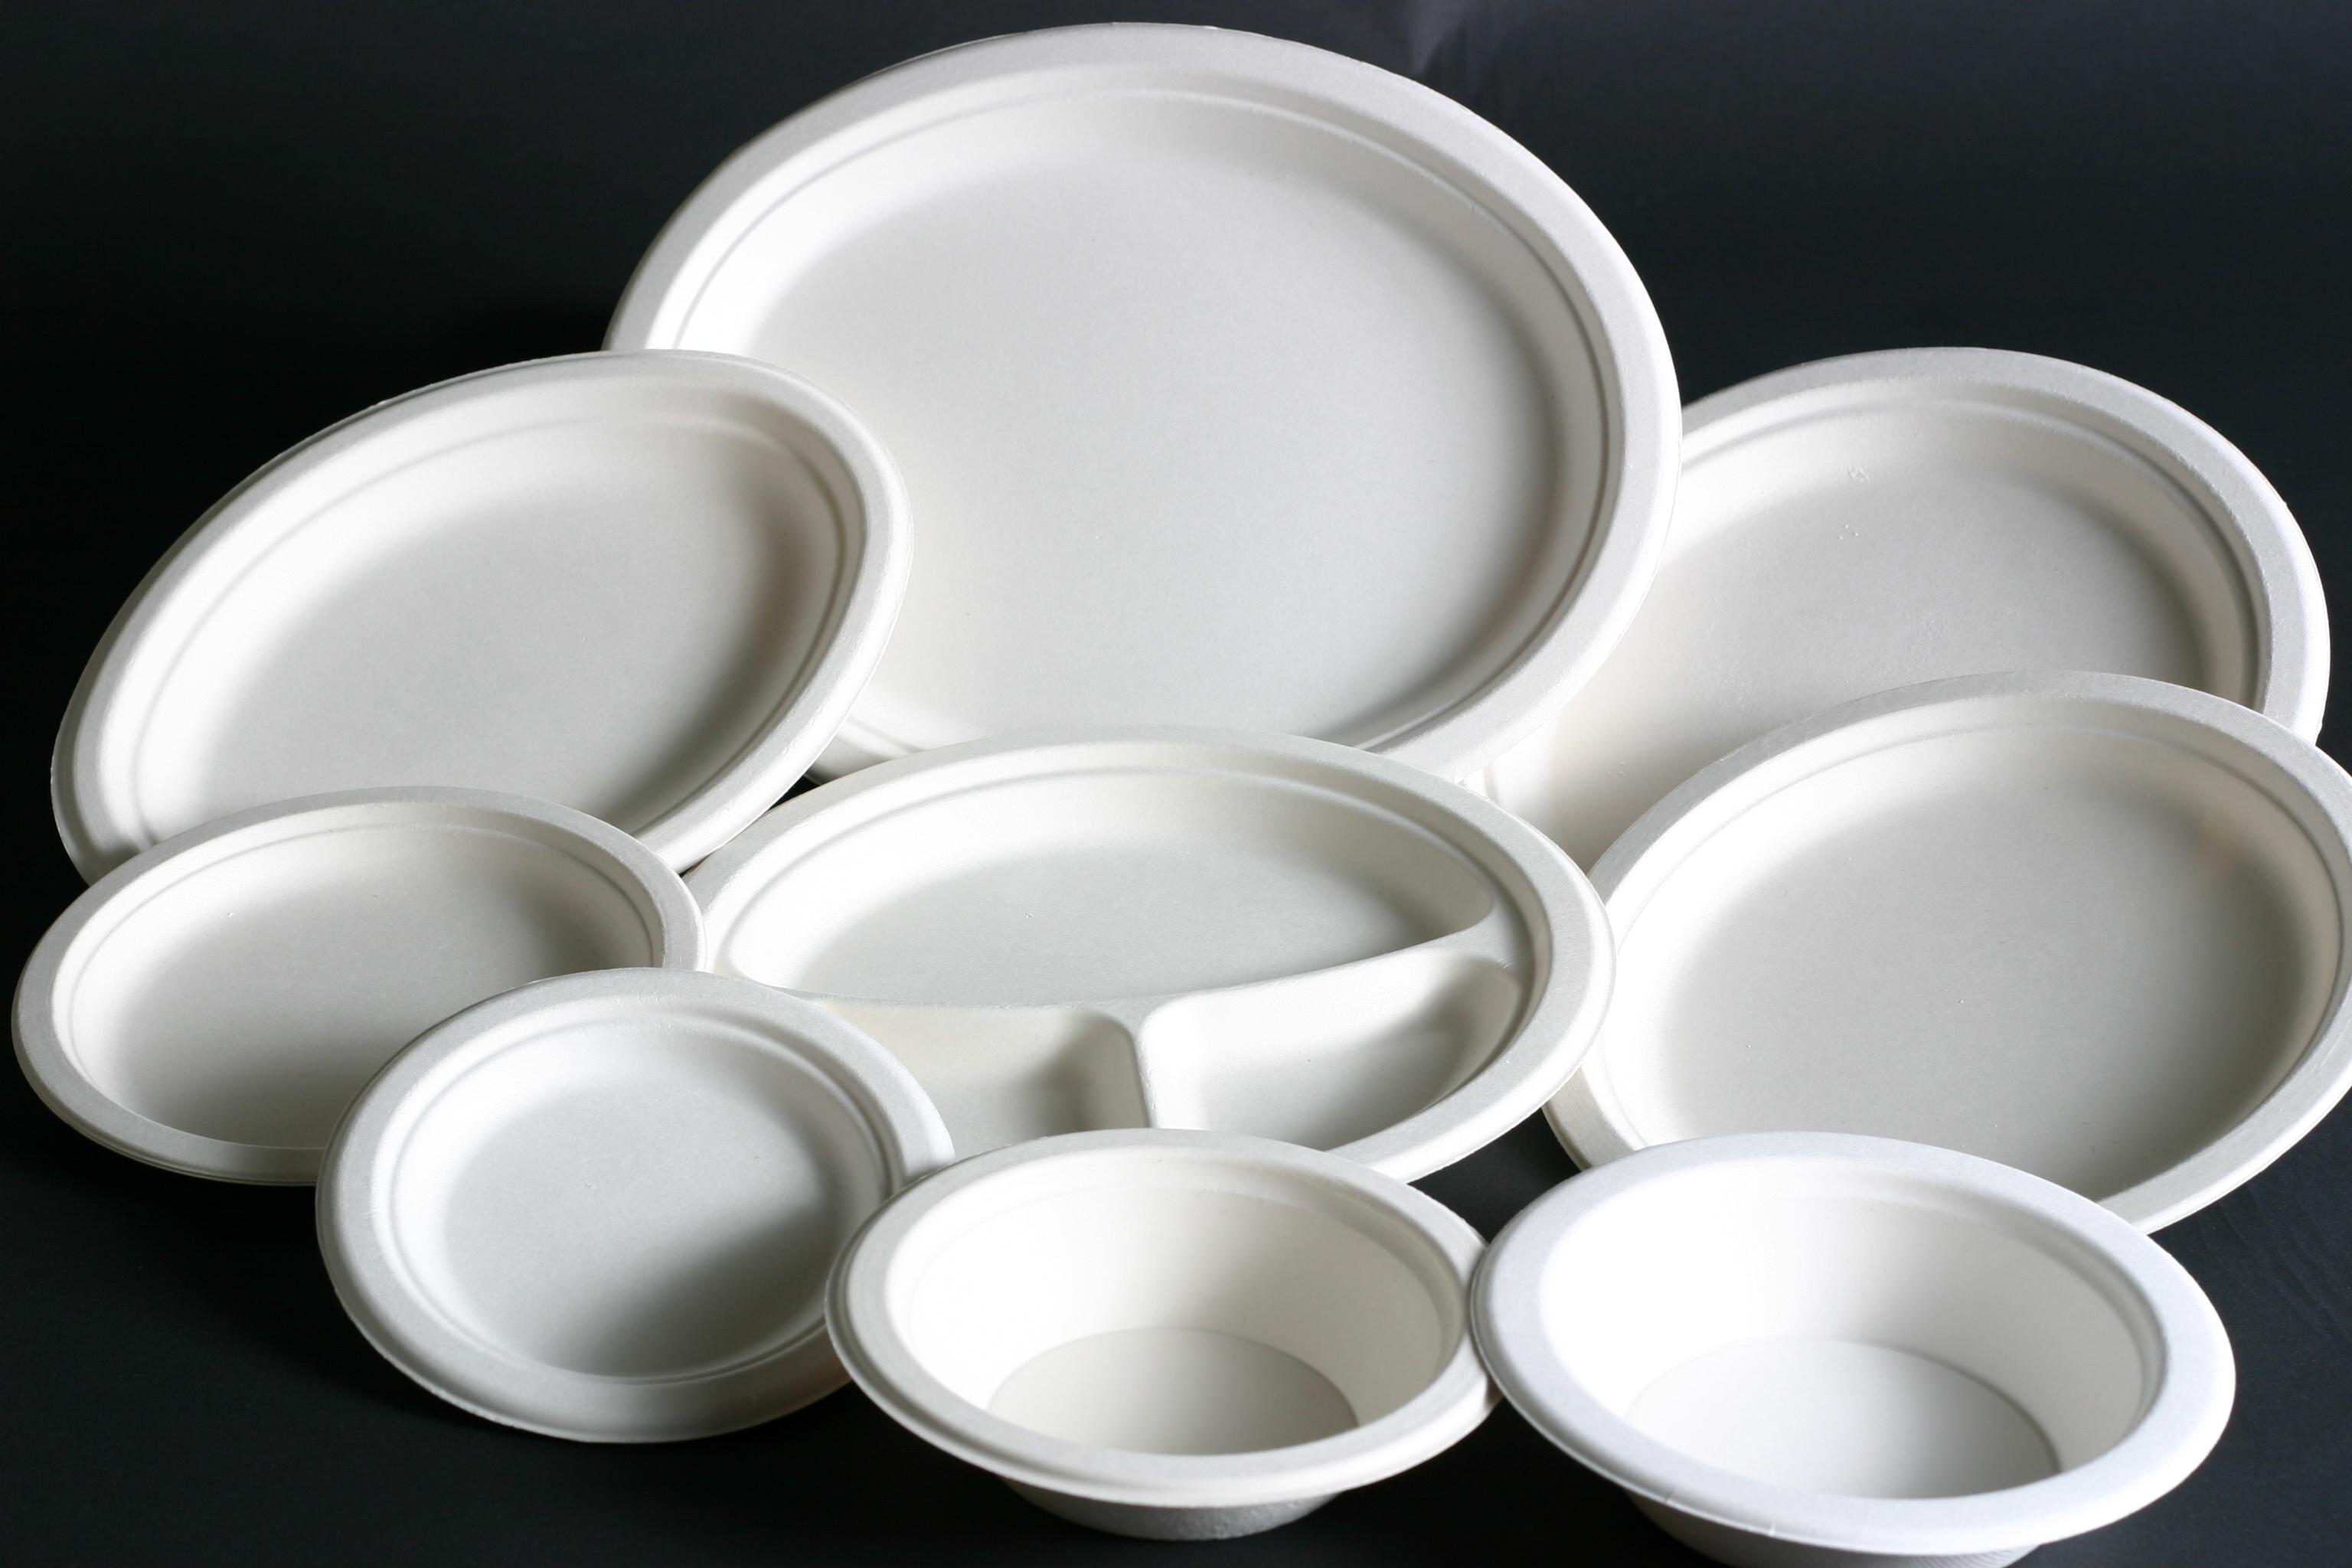 Smanjiti upotrebu plastičnih tanjira - Avaz